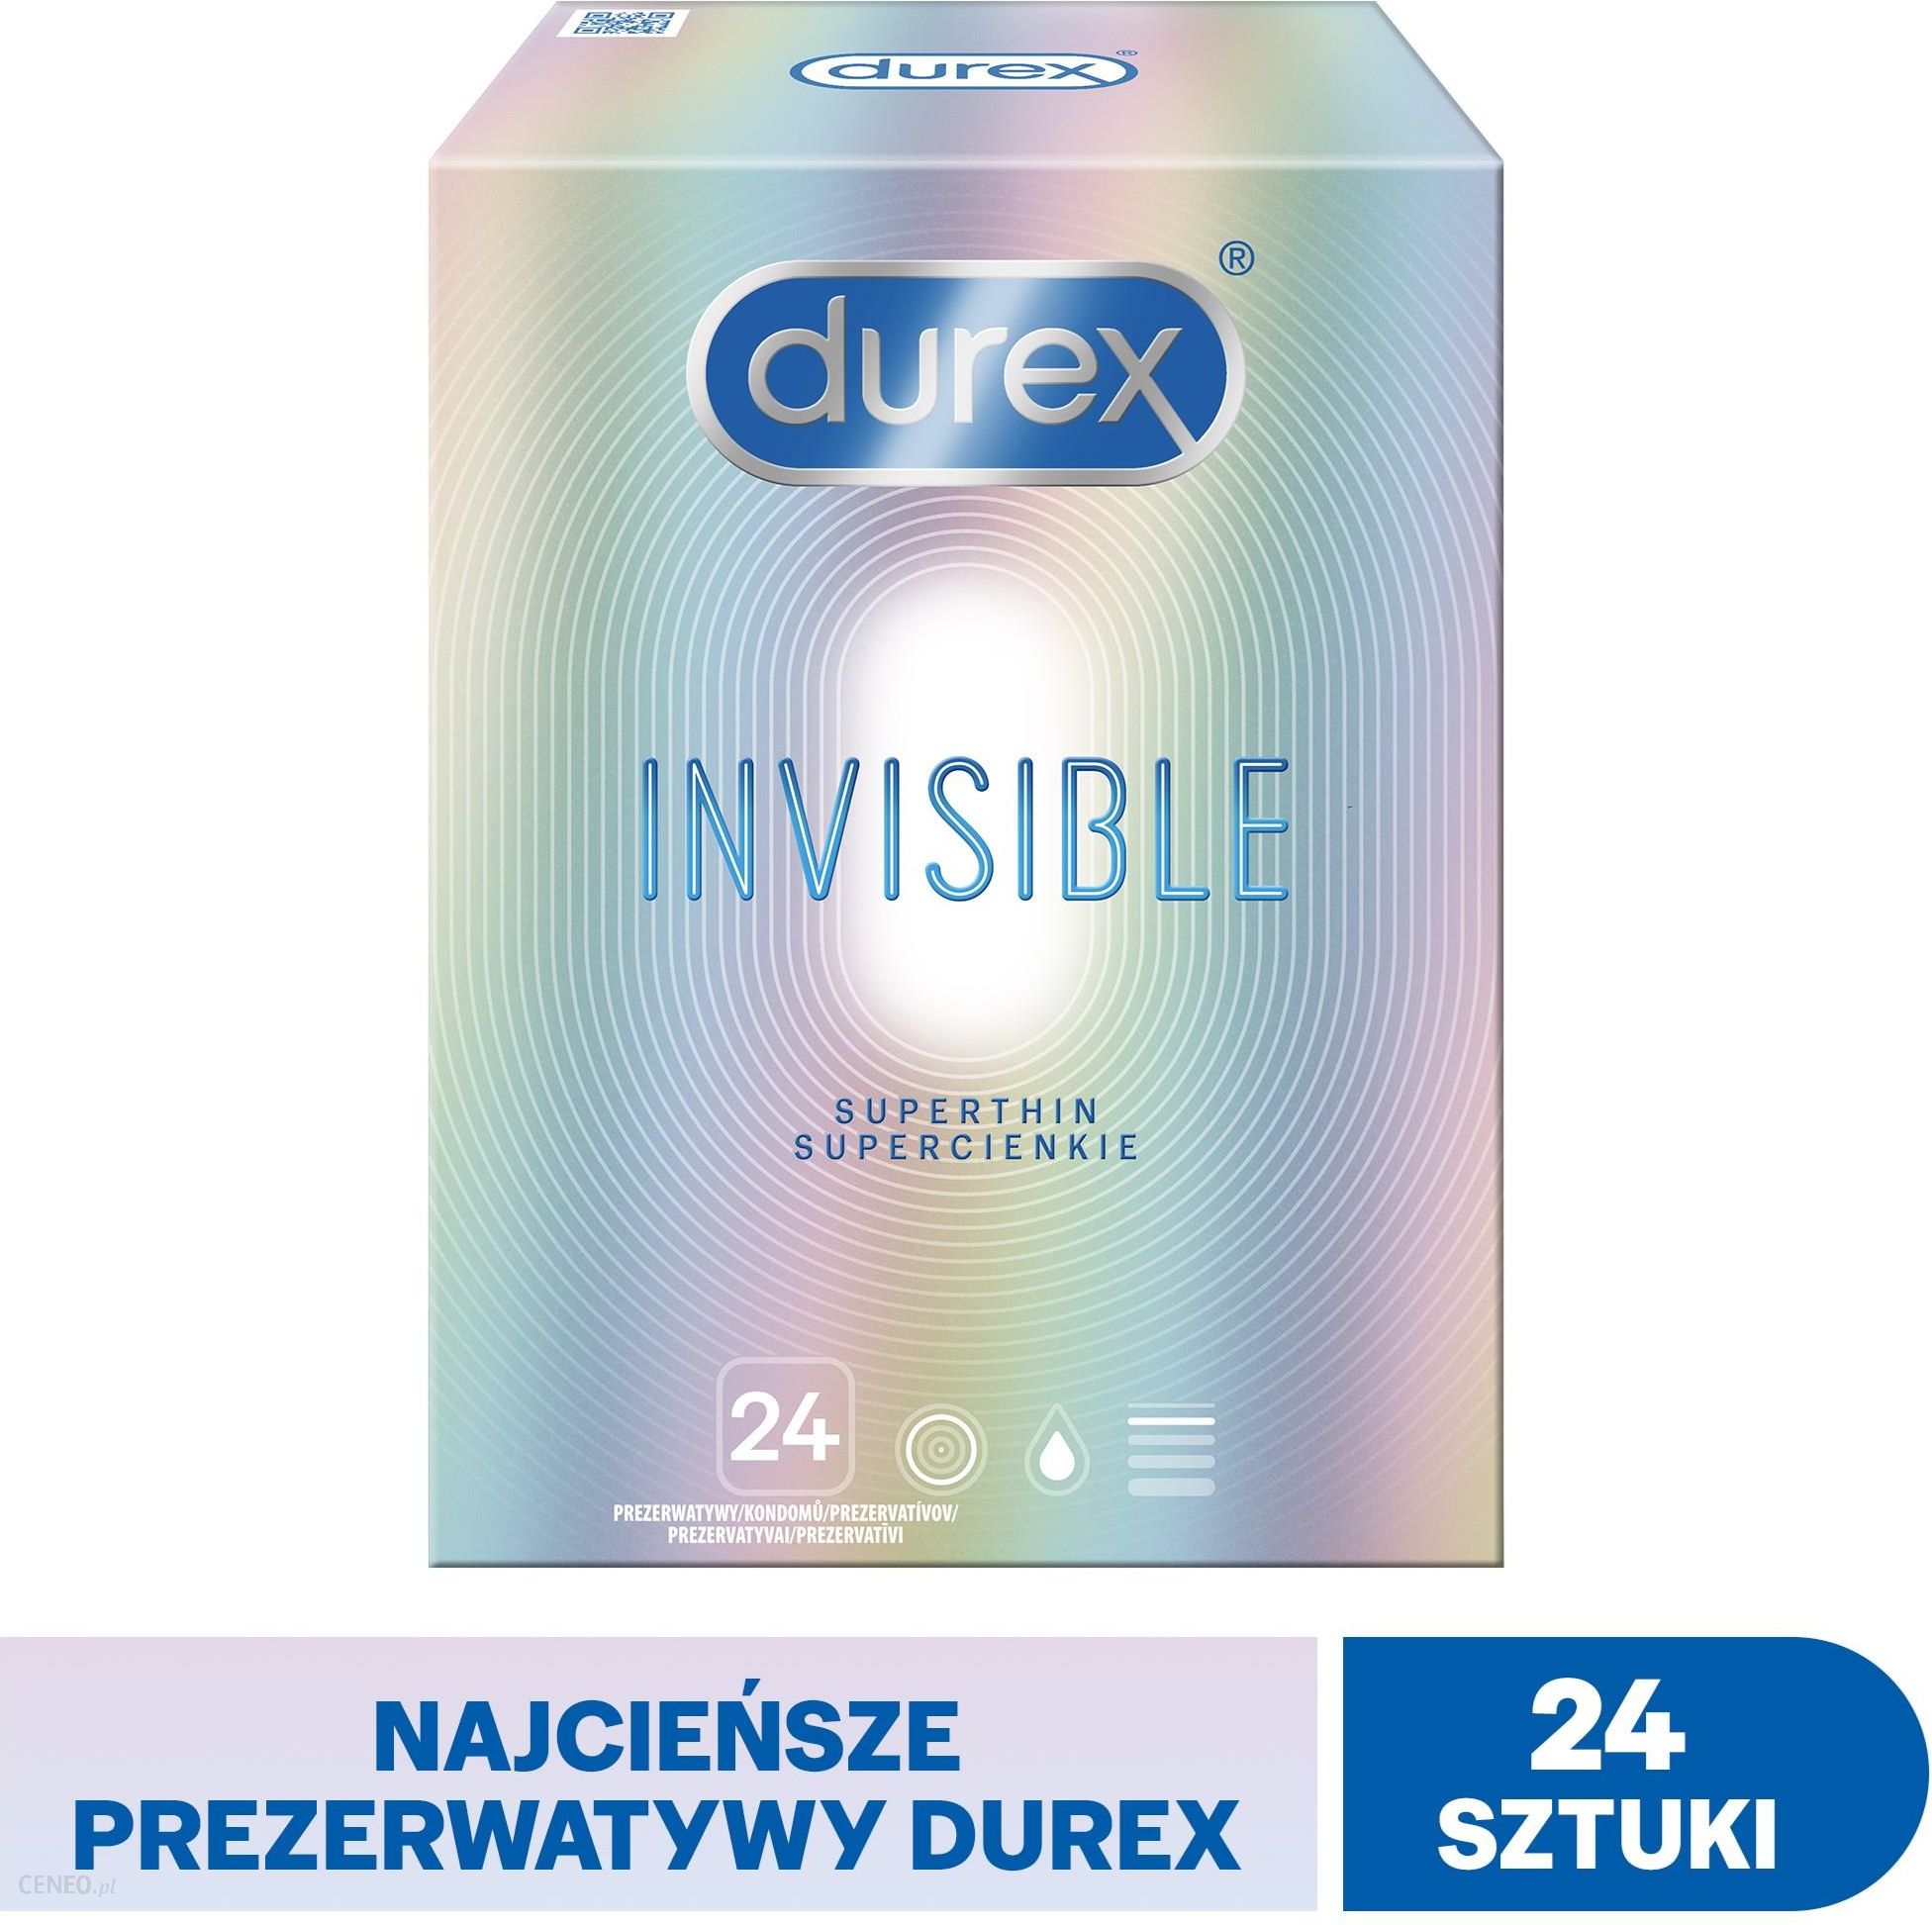 Durex prezerwatywy Invisible Supercienkie 24 szt.